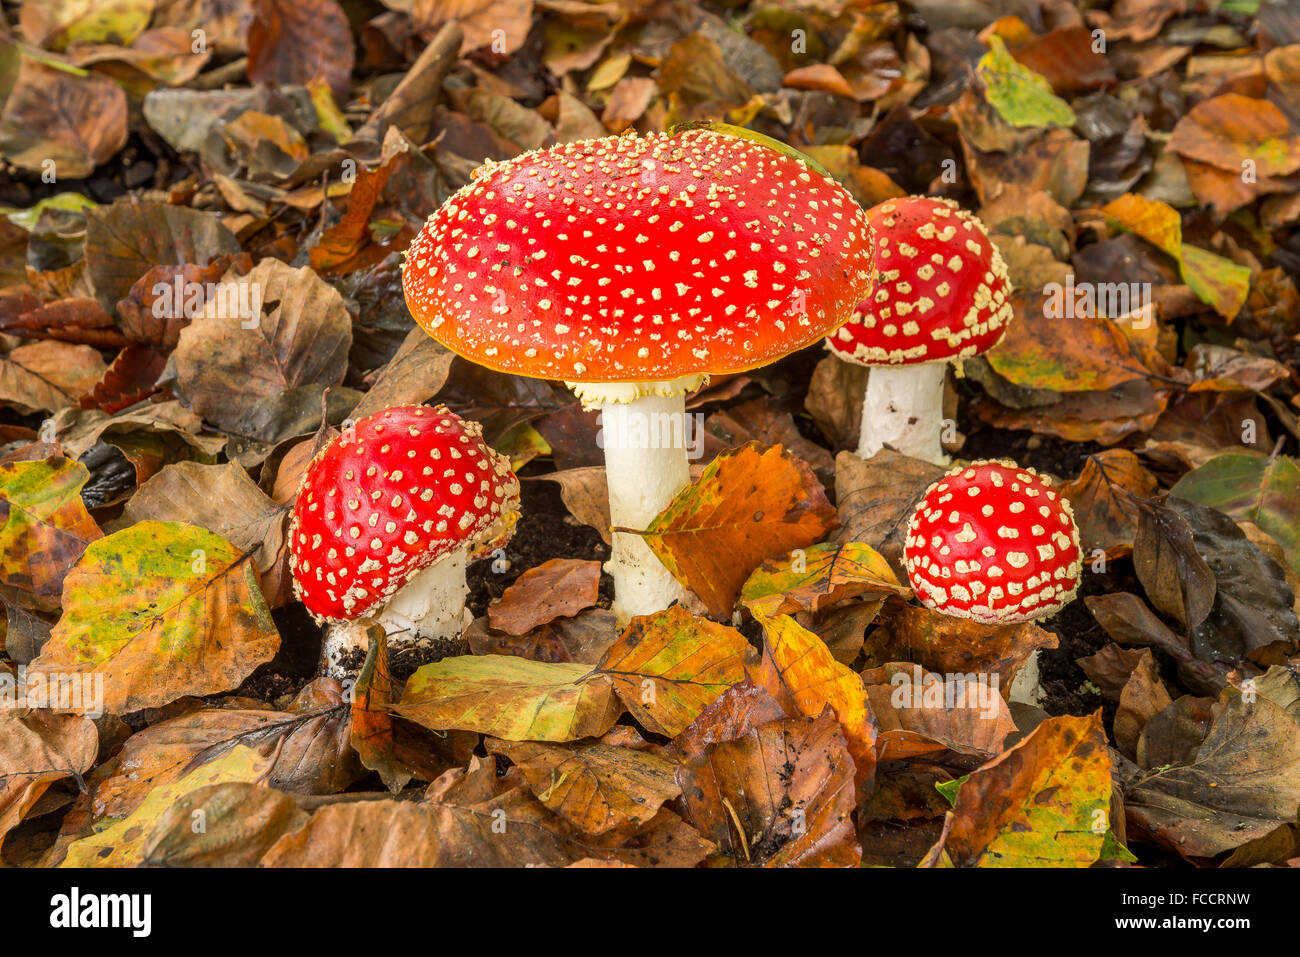 Amanita muscaria mushrooms. Stock Photo